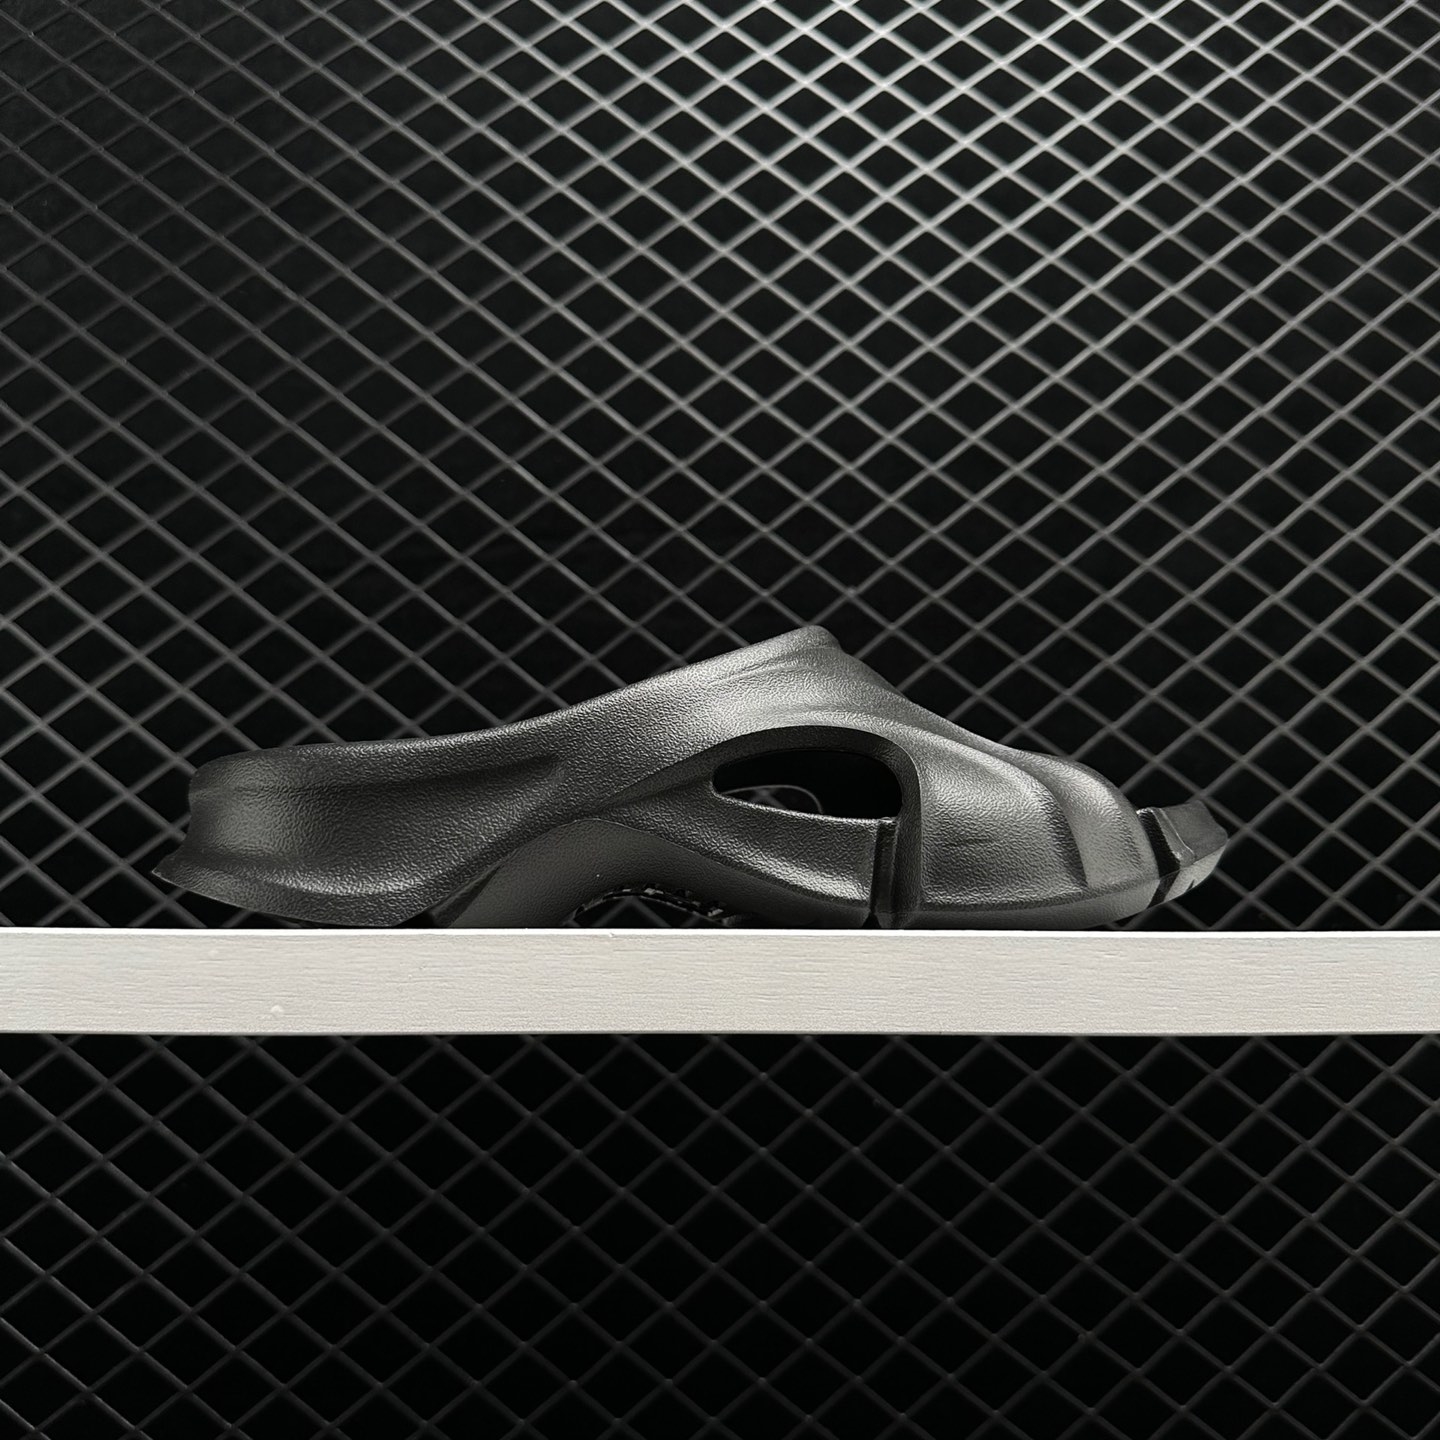 Balenciaga Mold Slide Sandal Black 653873W3CE29000 - Stylish and Comfortable Women's Sandals